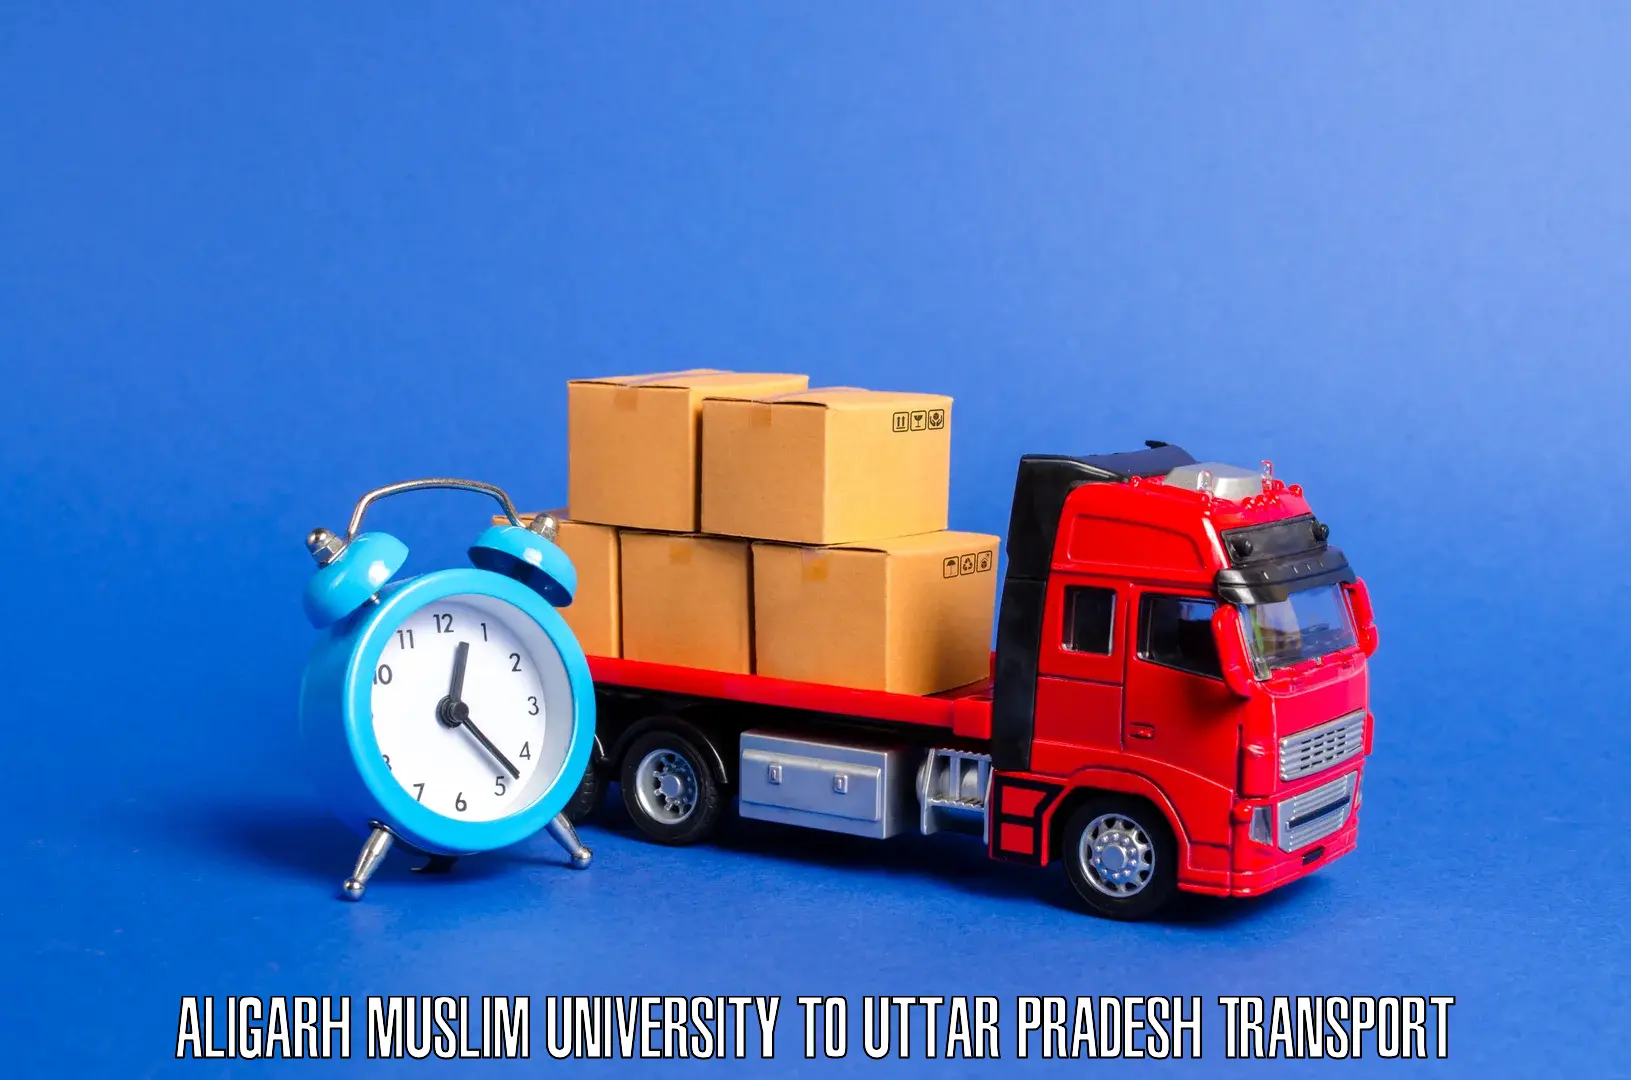 Express transport services Aligarh Muslim University to Manda